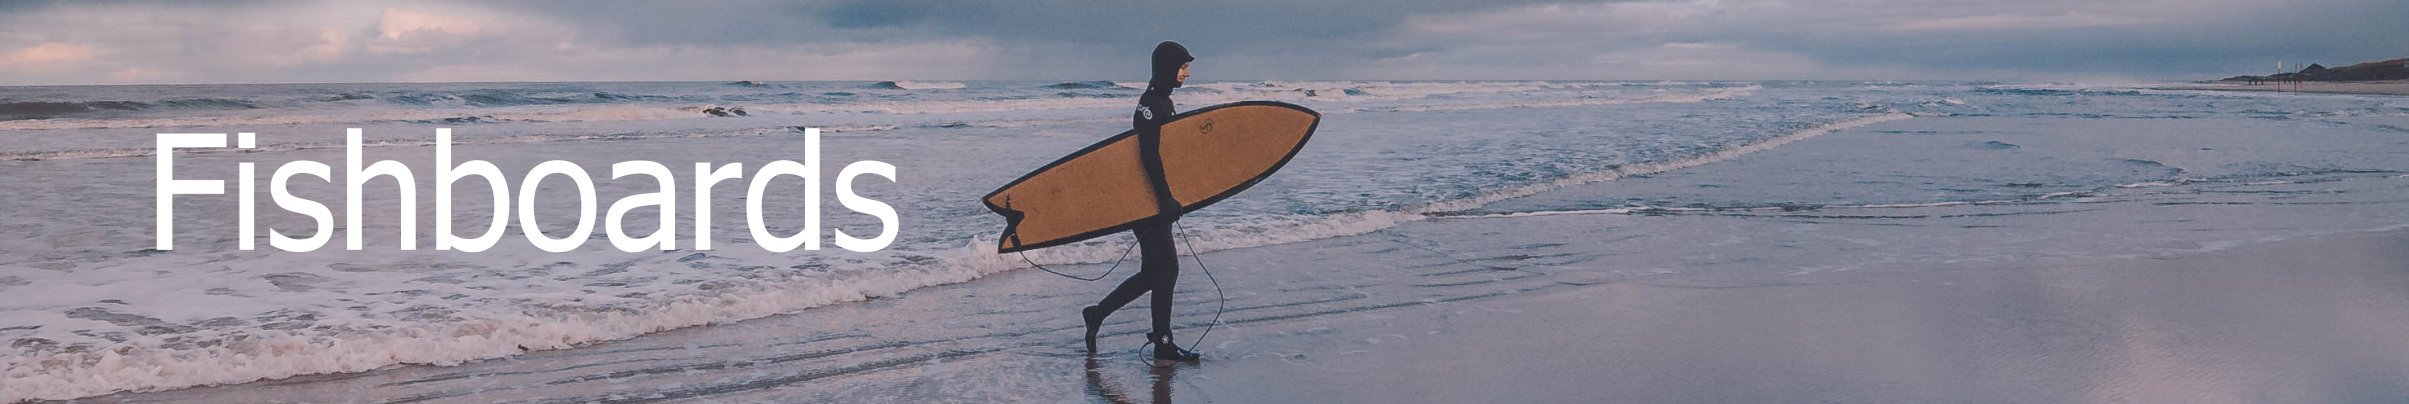 Fish surfboard buy online surfshop header